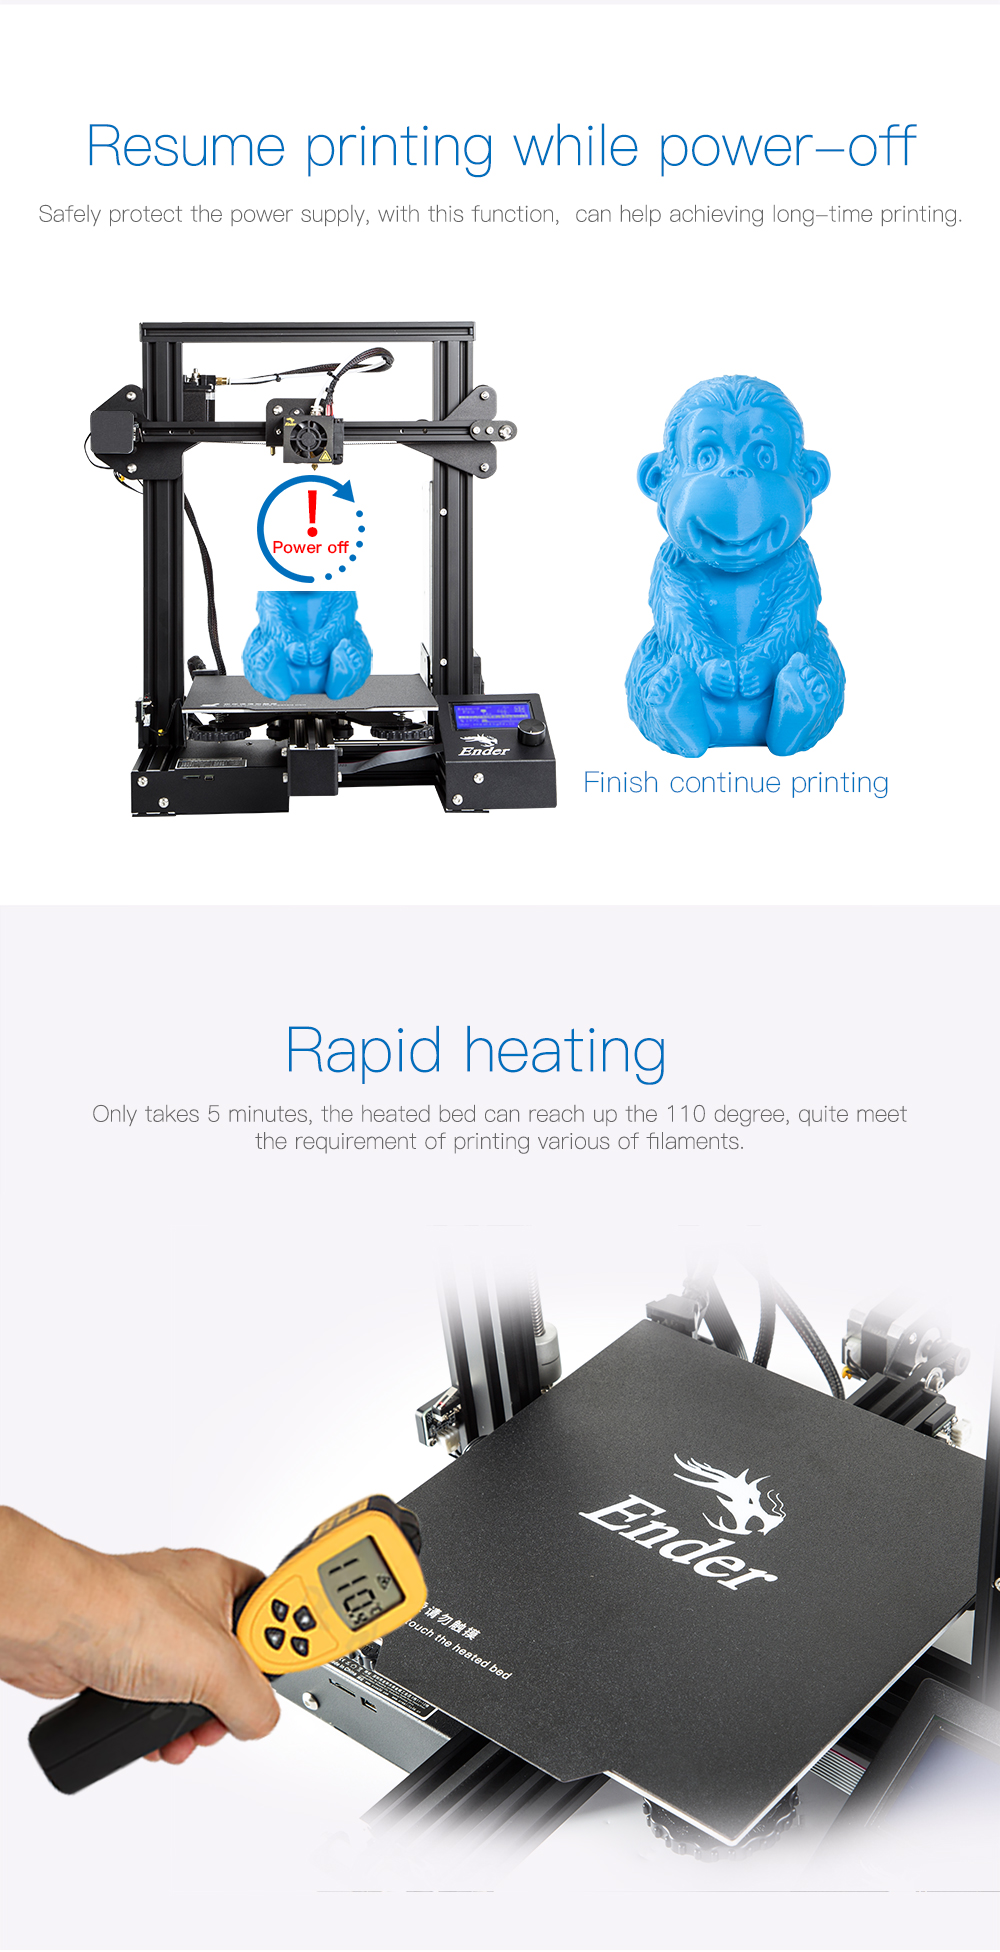 Creality 3D® Ender-3 Pro V-slot Prusa I3 DIY 3D Printer 220x220x250mm Printing Size With Magnetic Removable Platform Sticker/Power Resume Function/Off-line Print/Patent MK10 Extruder/Simple Leveling 9